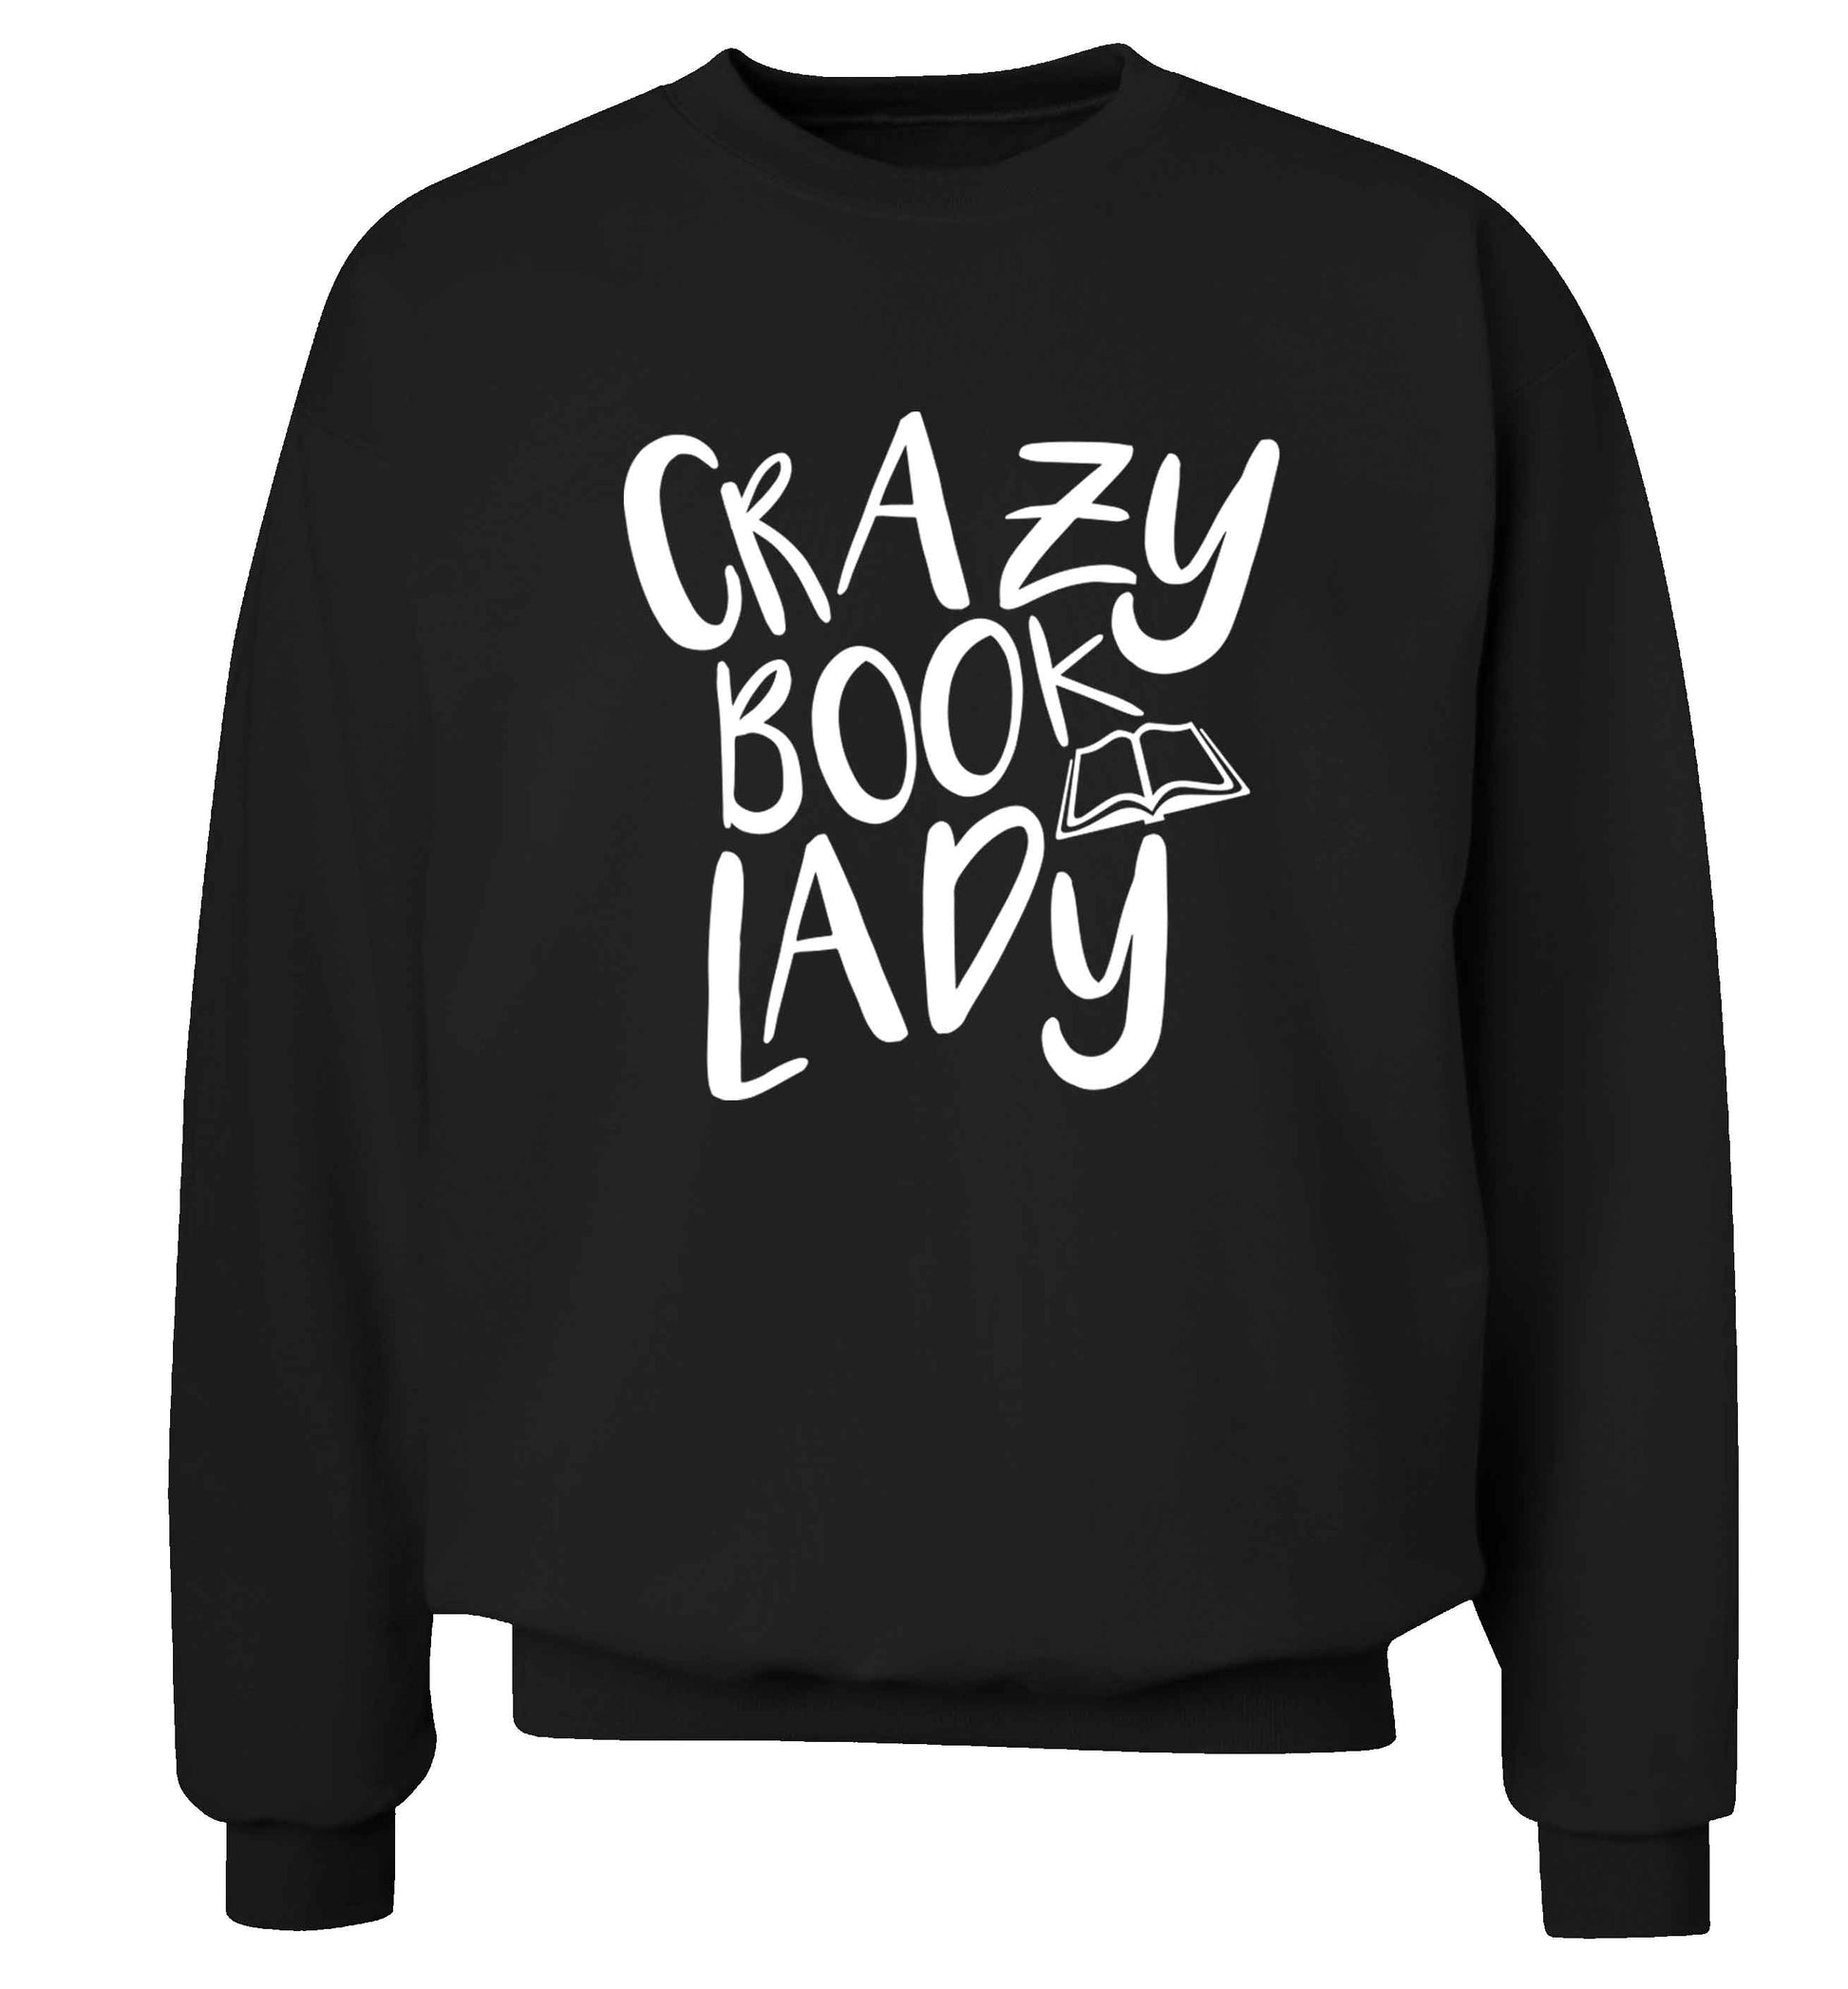 Crazy book lady Adult's unisex black Sweater 2XL